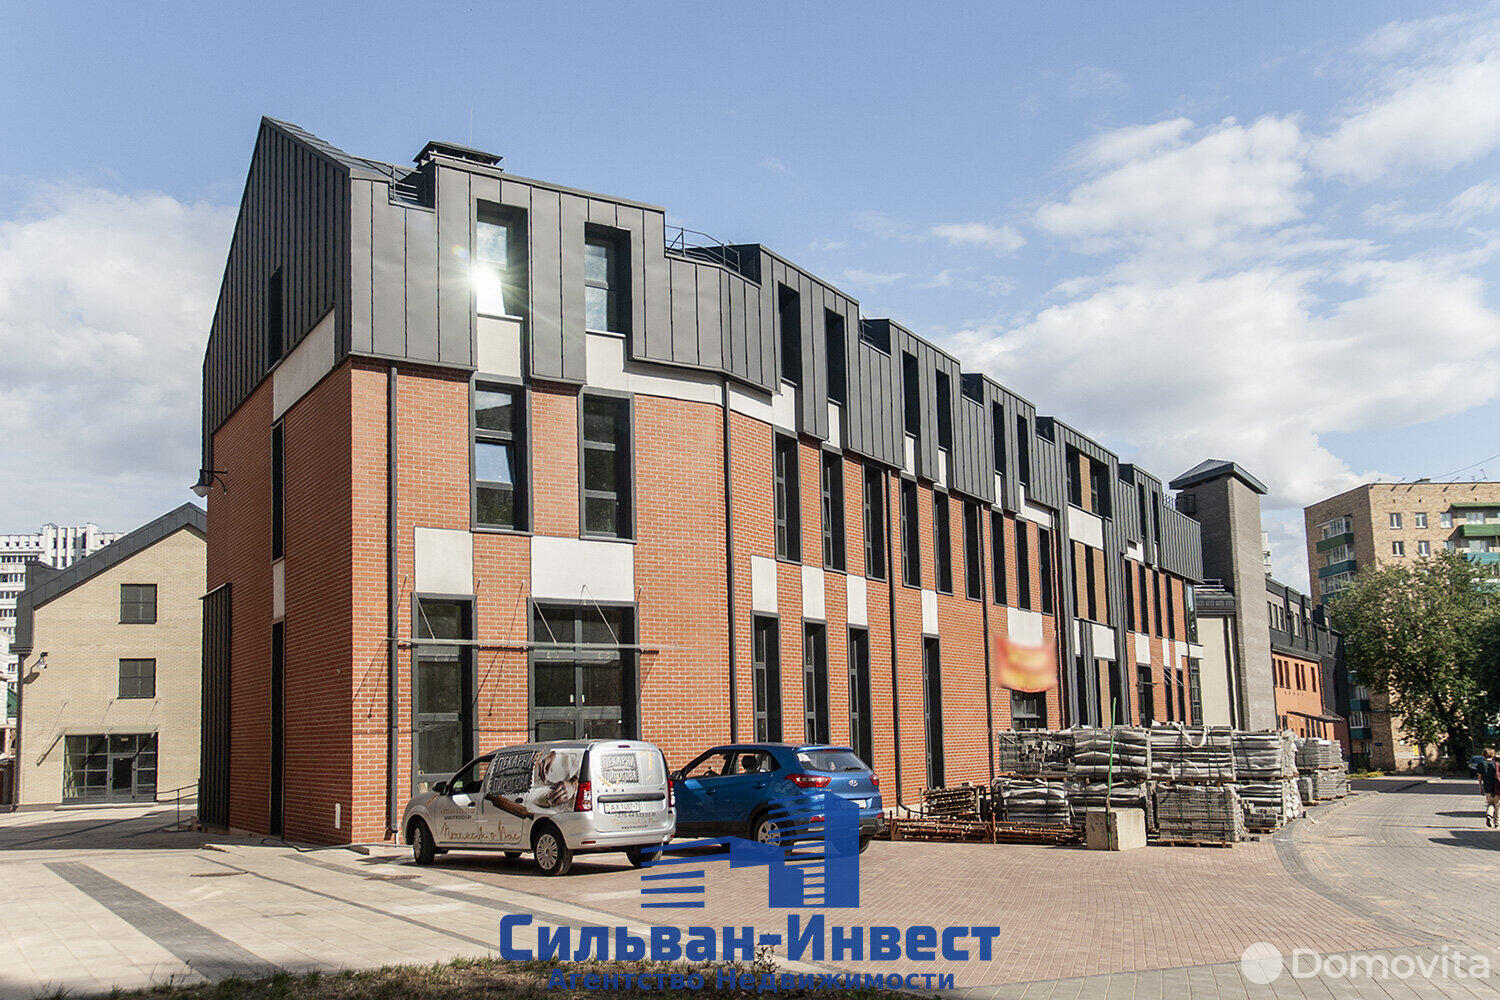 Аренда офиса на ул. Юрово-Завальная, д. 13 в Минске, 2090EUR, код 11036 - фото 3